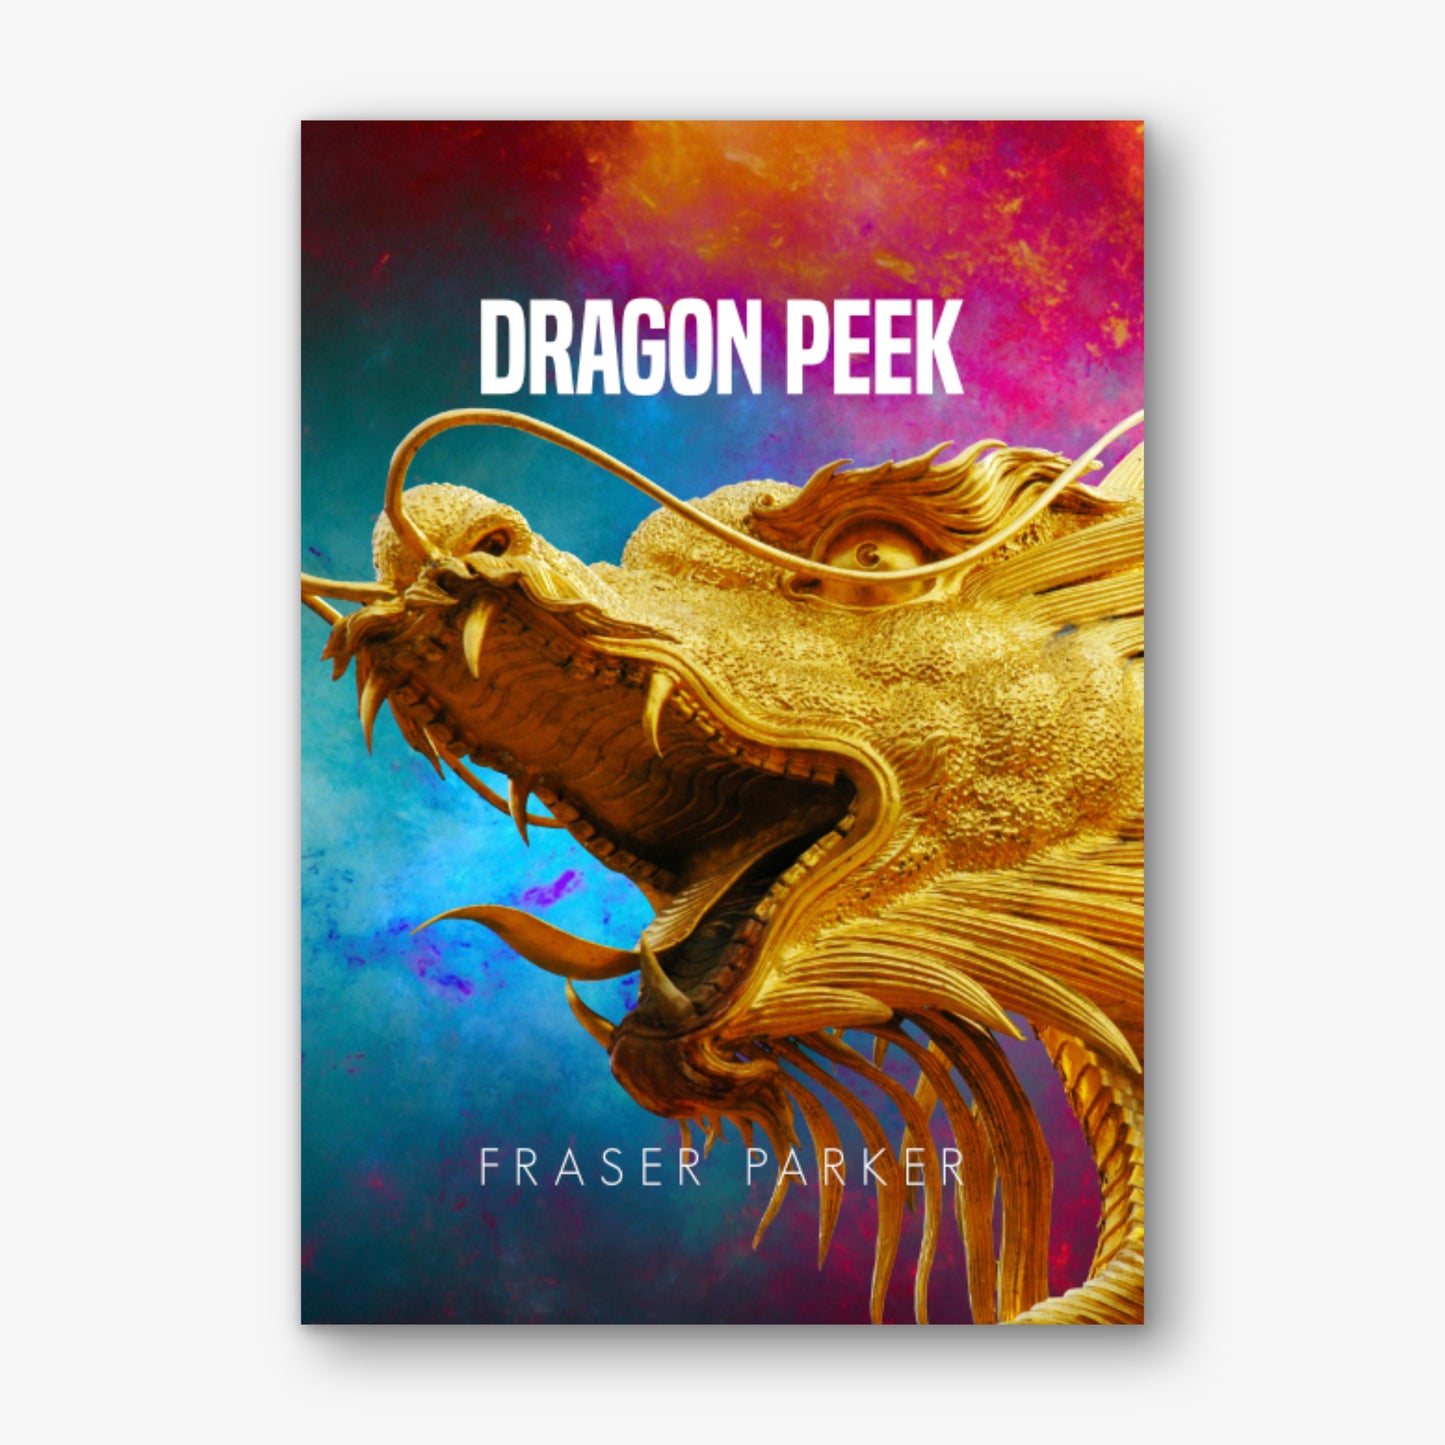 Dragon Peek by Fraser Parker